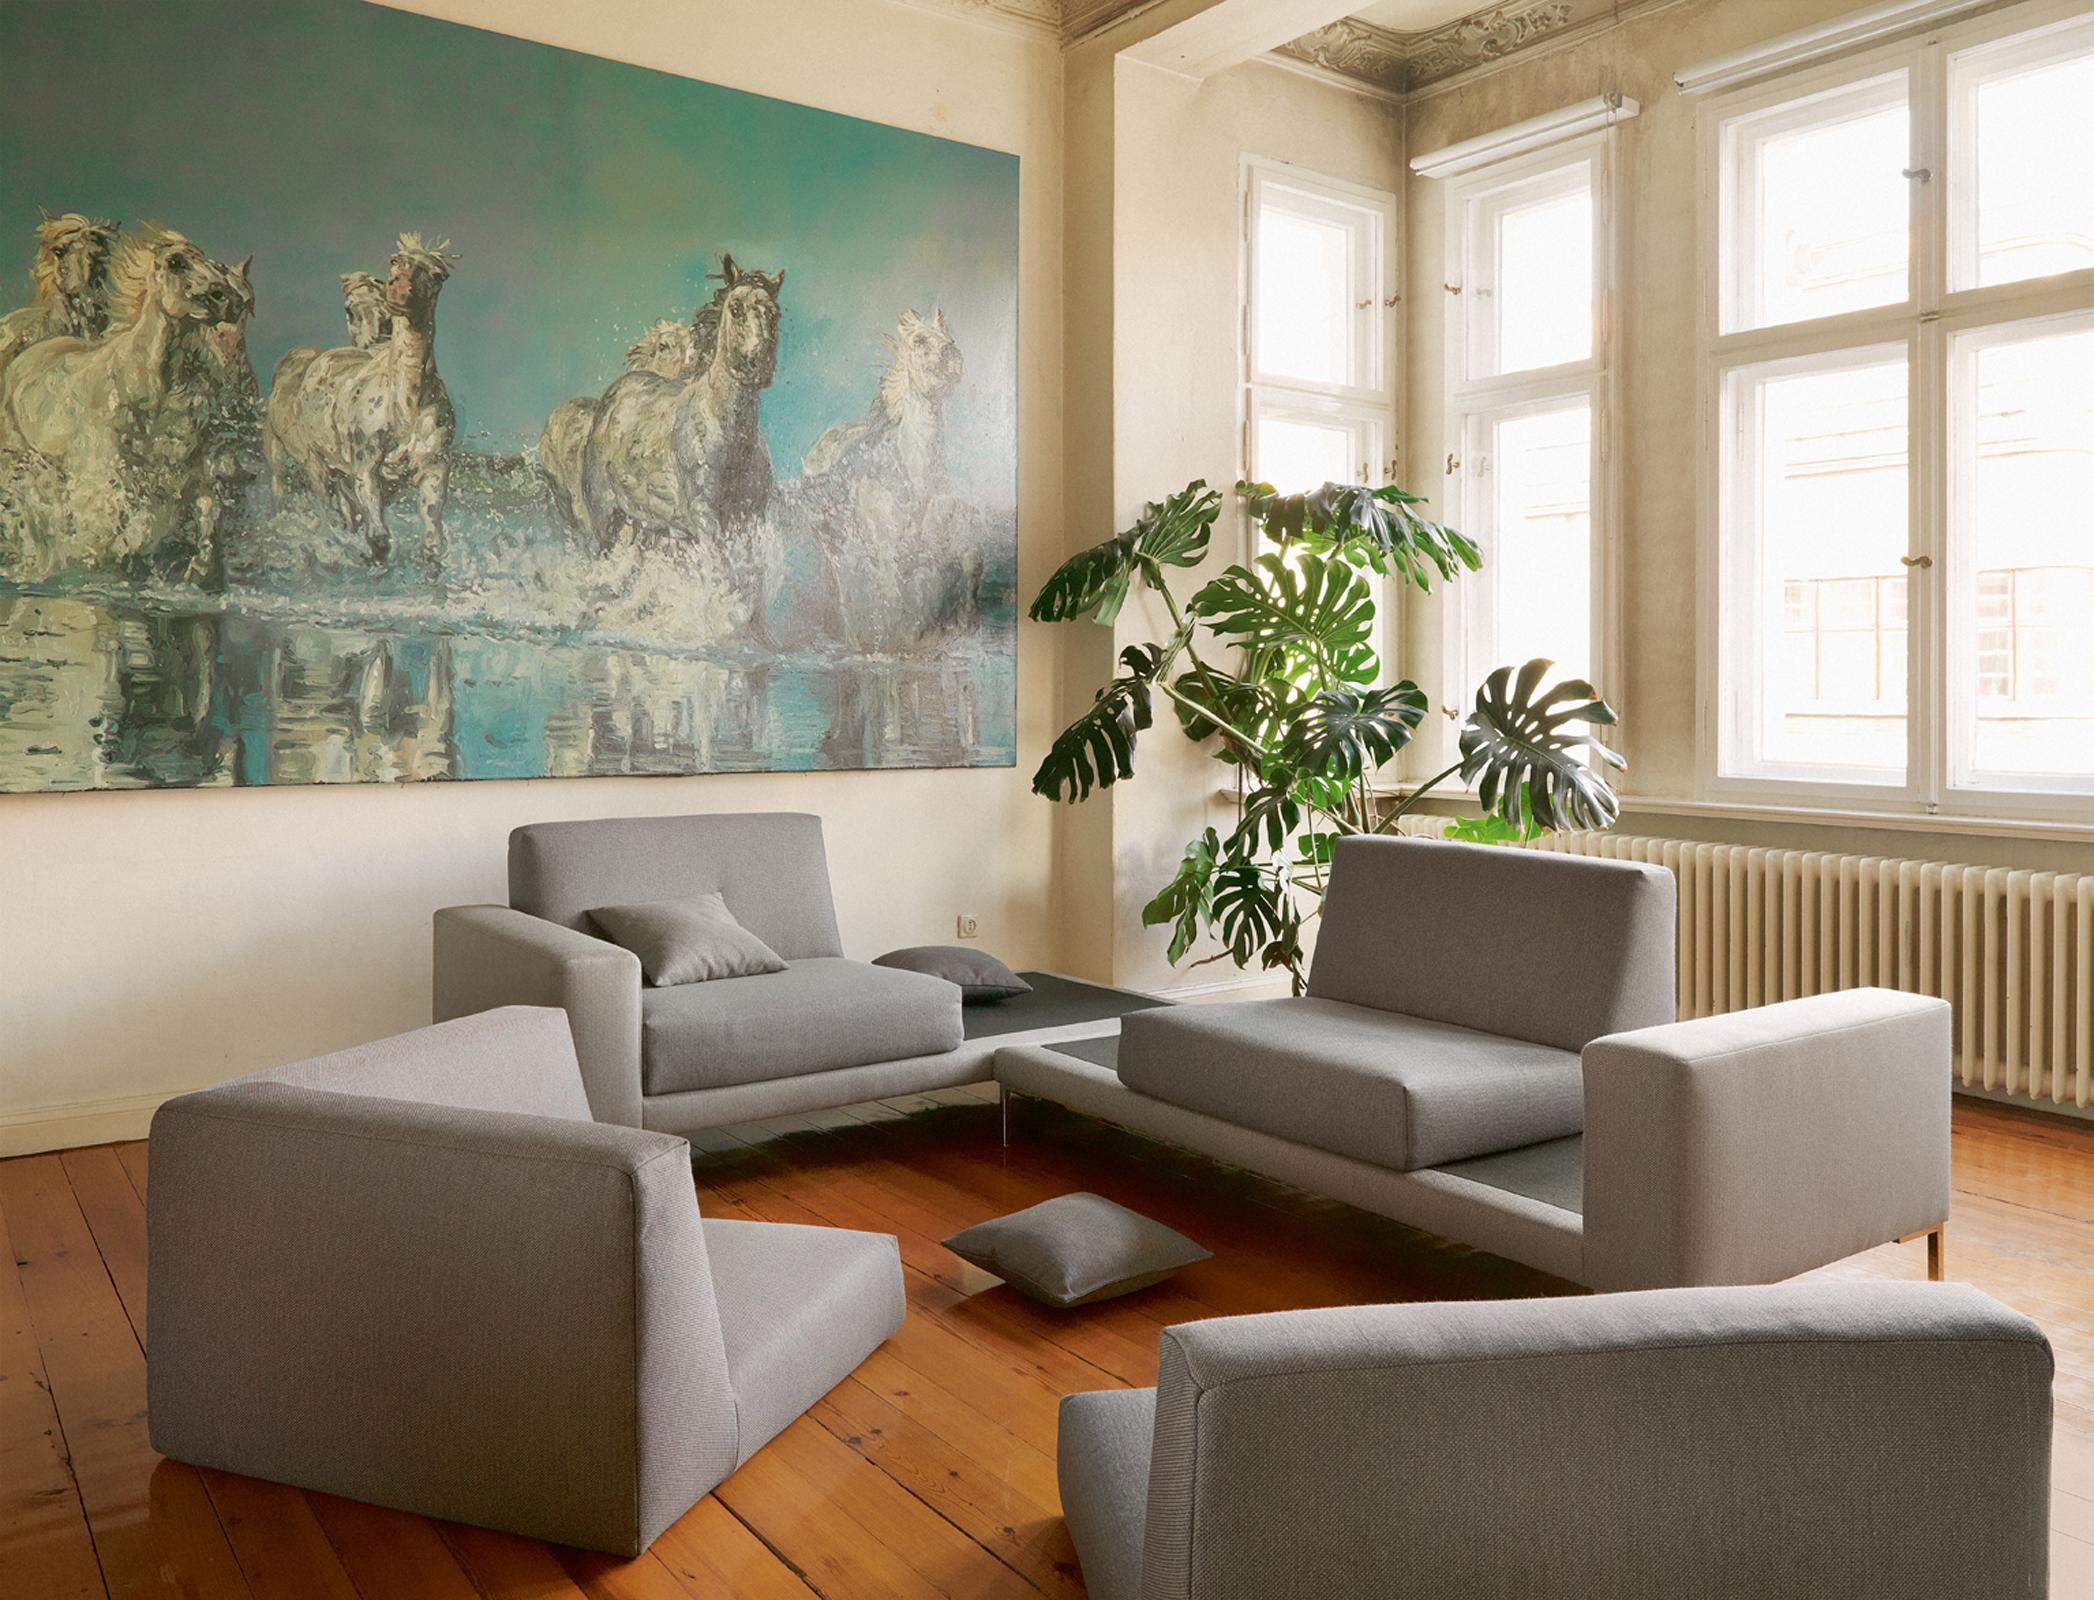 Moderne graue Sitzgruppe im hellen Altbau #grauessofa ©Freistil Rolf Benz